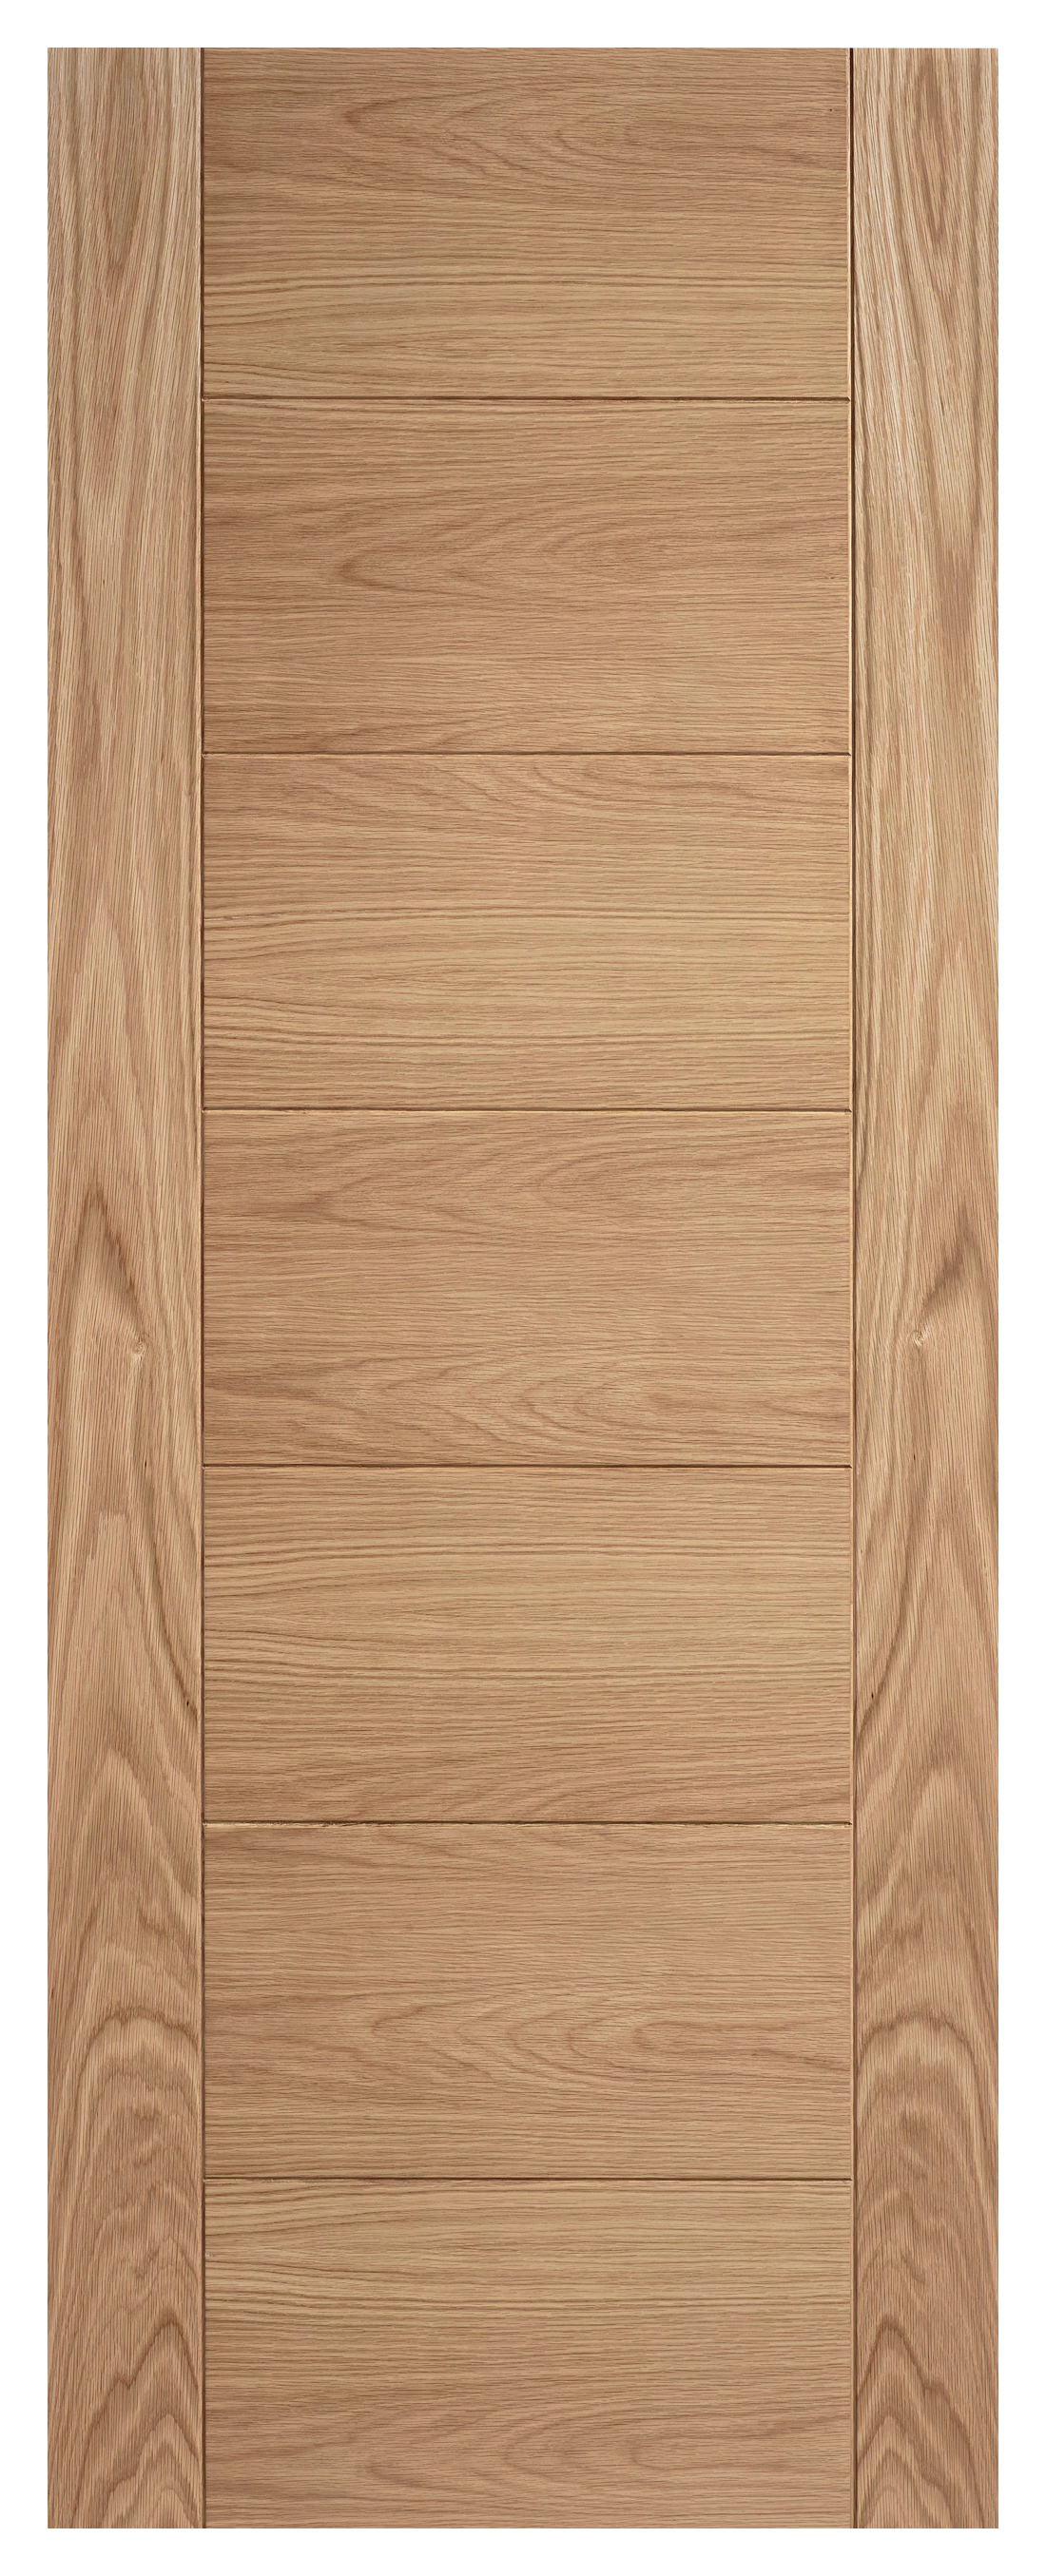 Image of LPD Internal Carini 7 Panel Pre-Finished Oak FD30 Fire Door - 838 x 1981mm